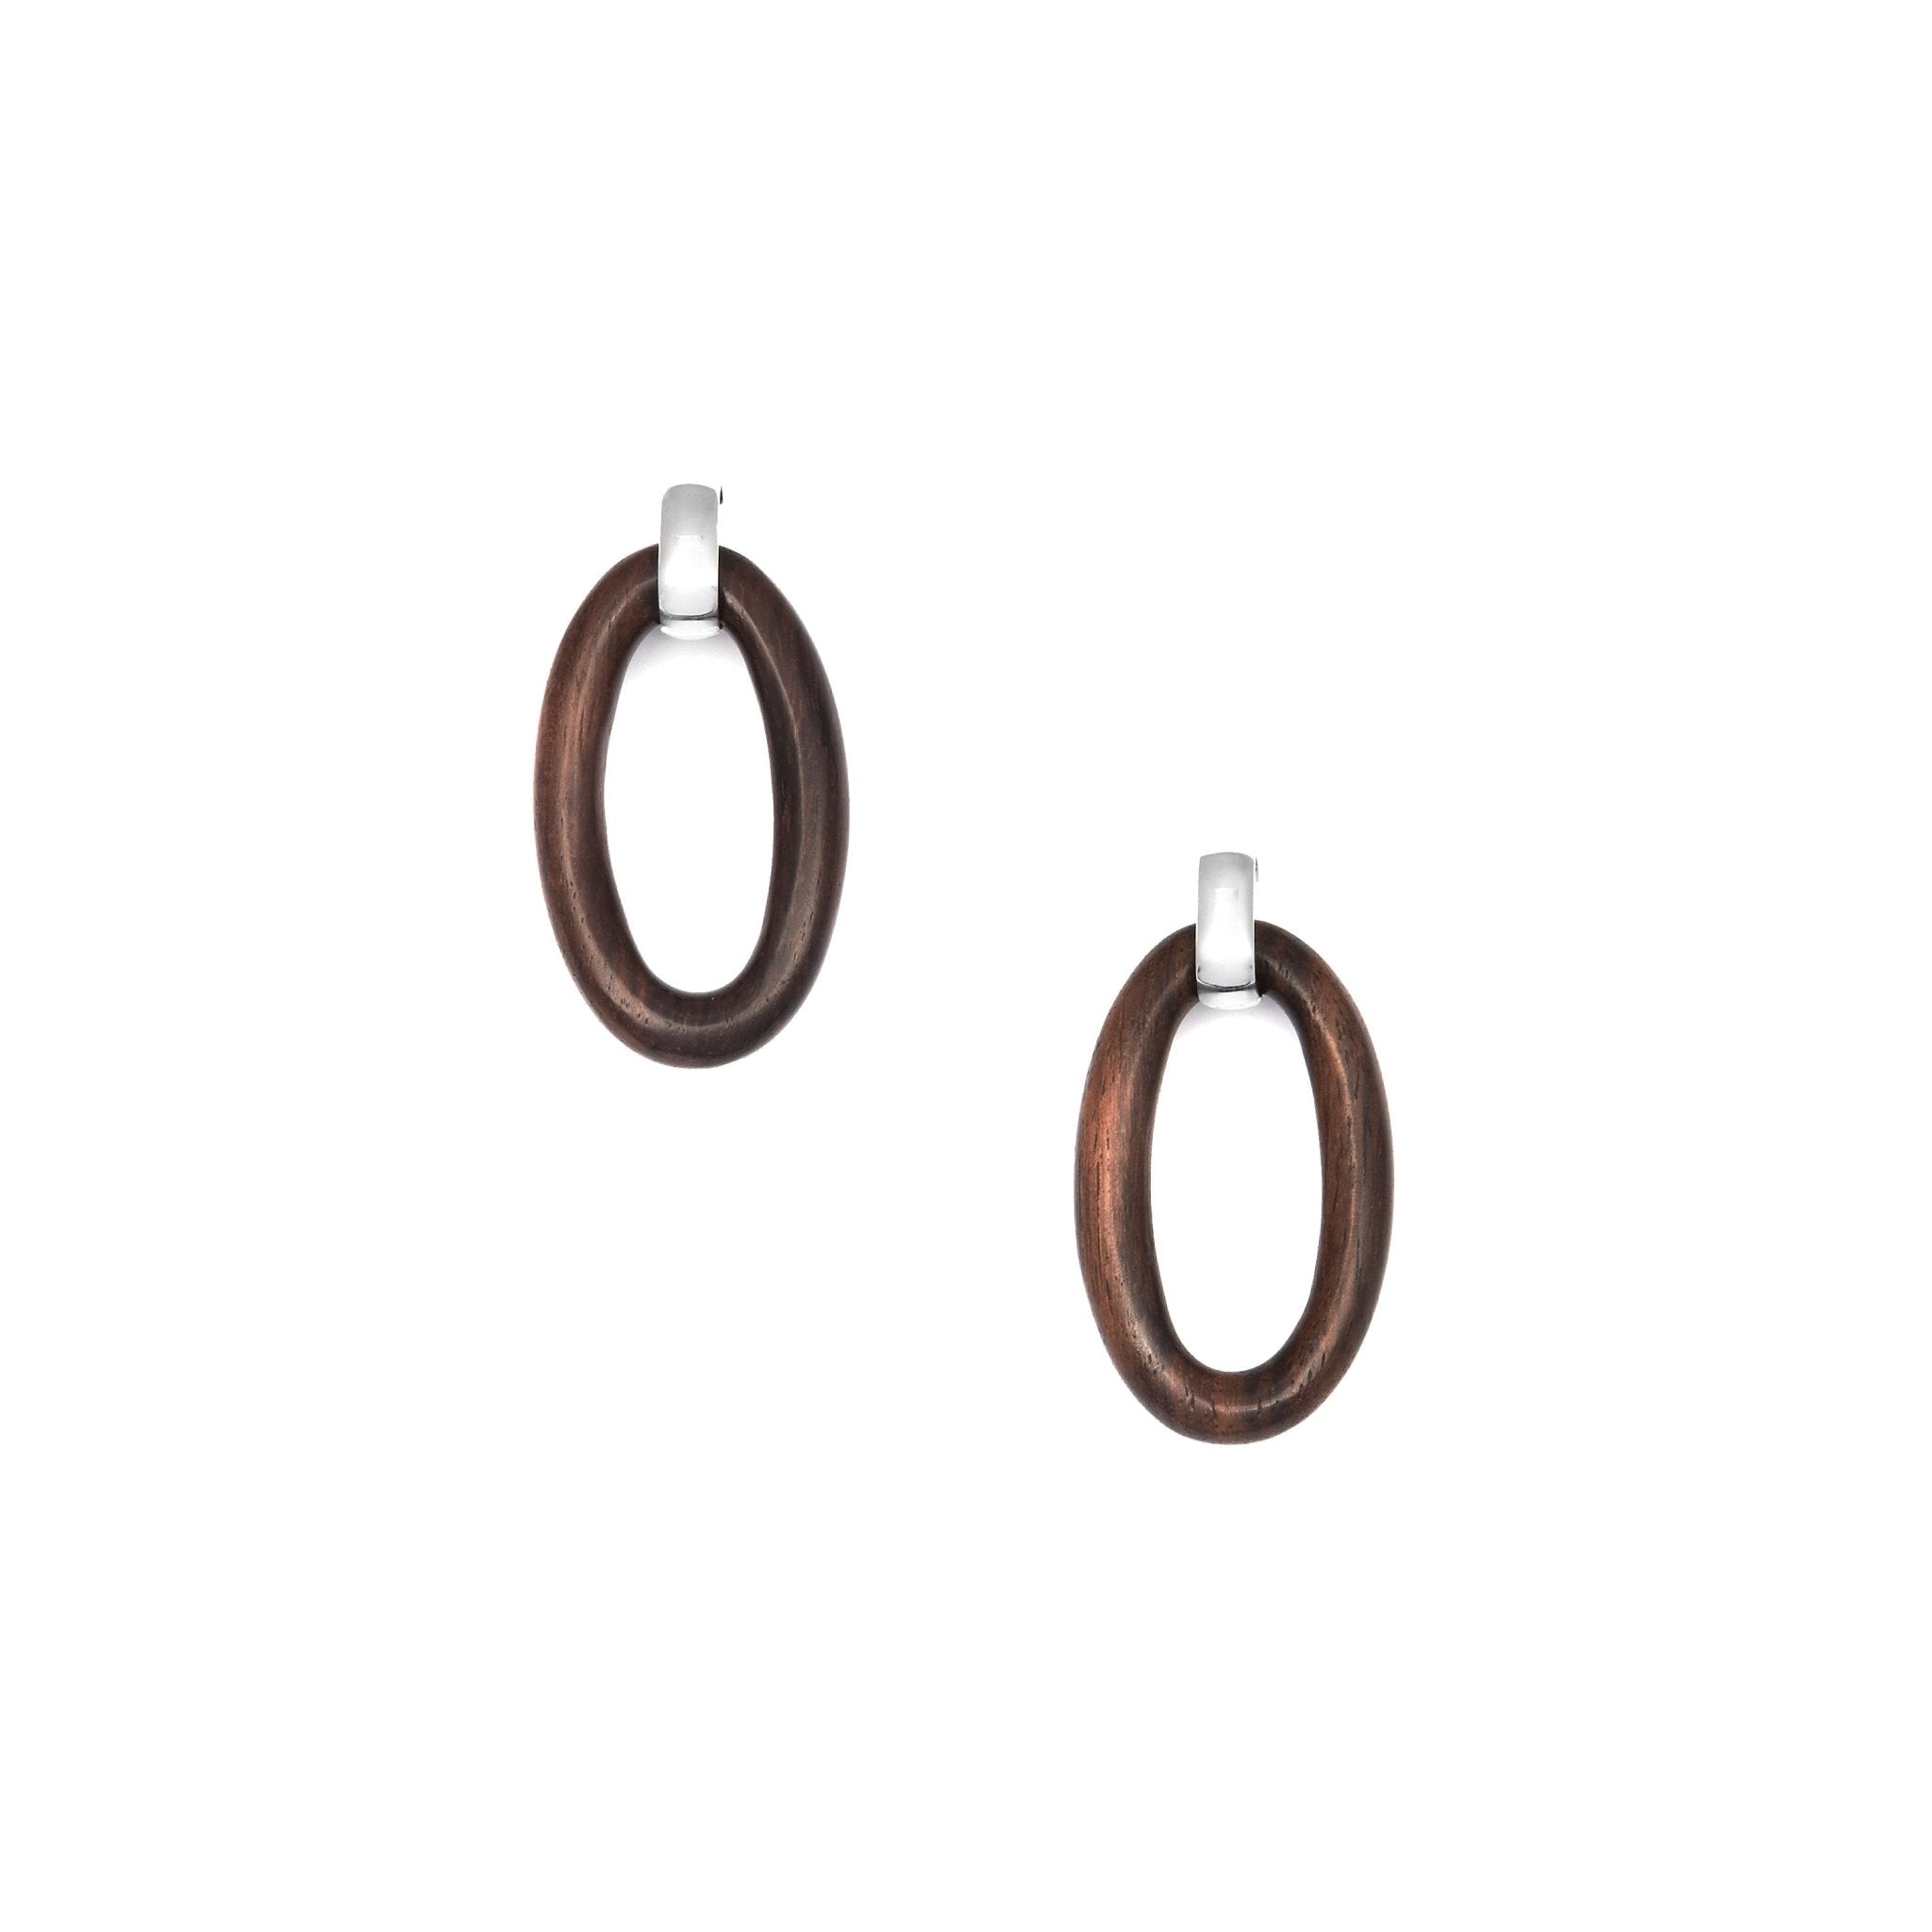 Oval wood hoop earrings with silver setting - Natalia Willmott